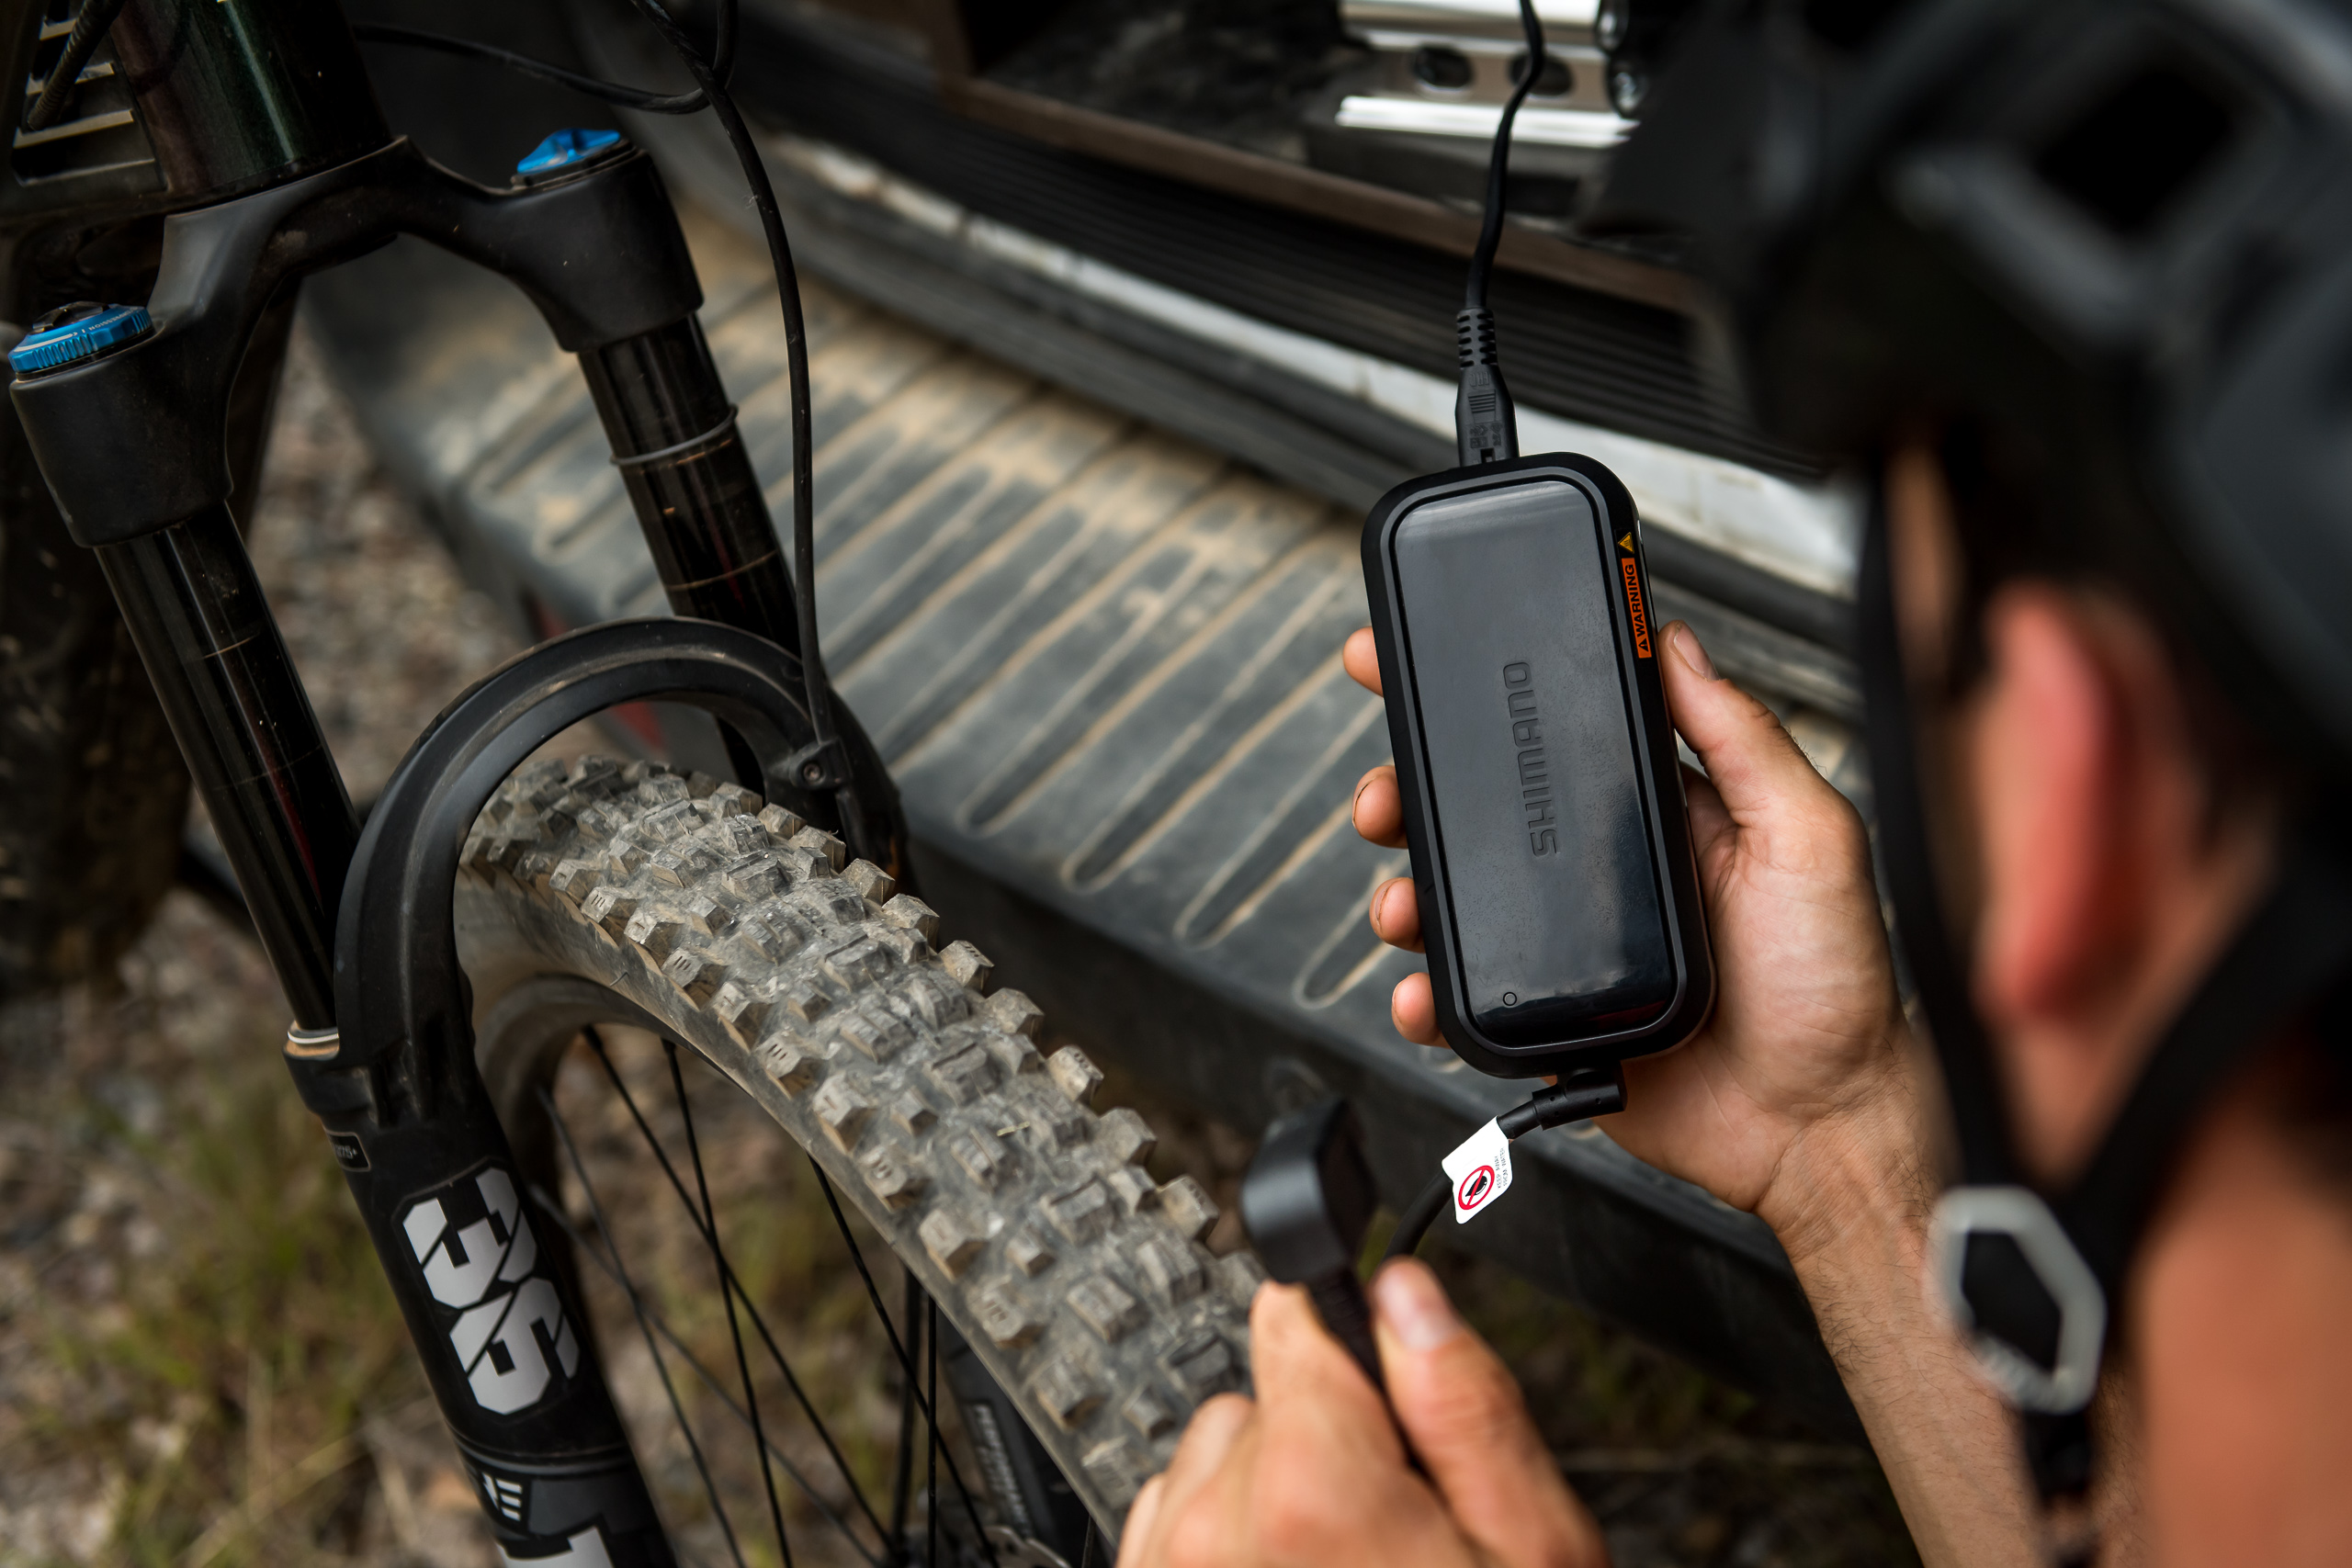 Shimano EP8 e-bike smart charger being used on an emtb bike